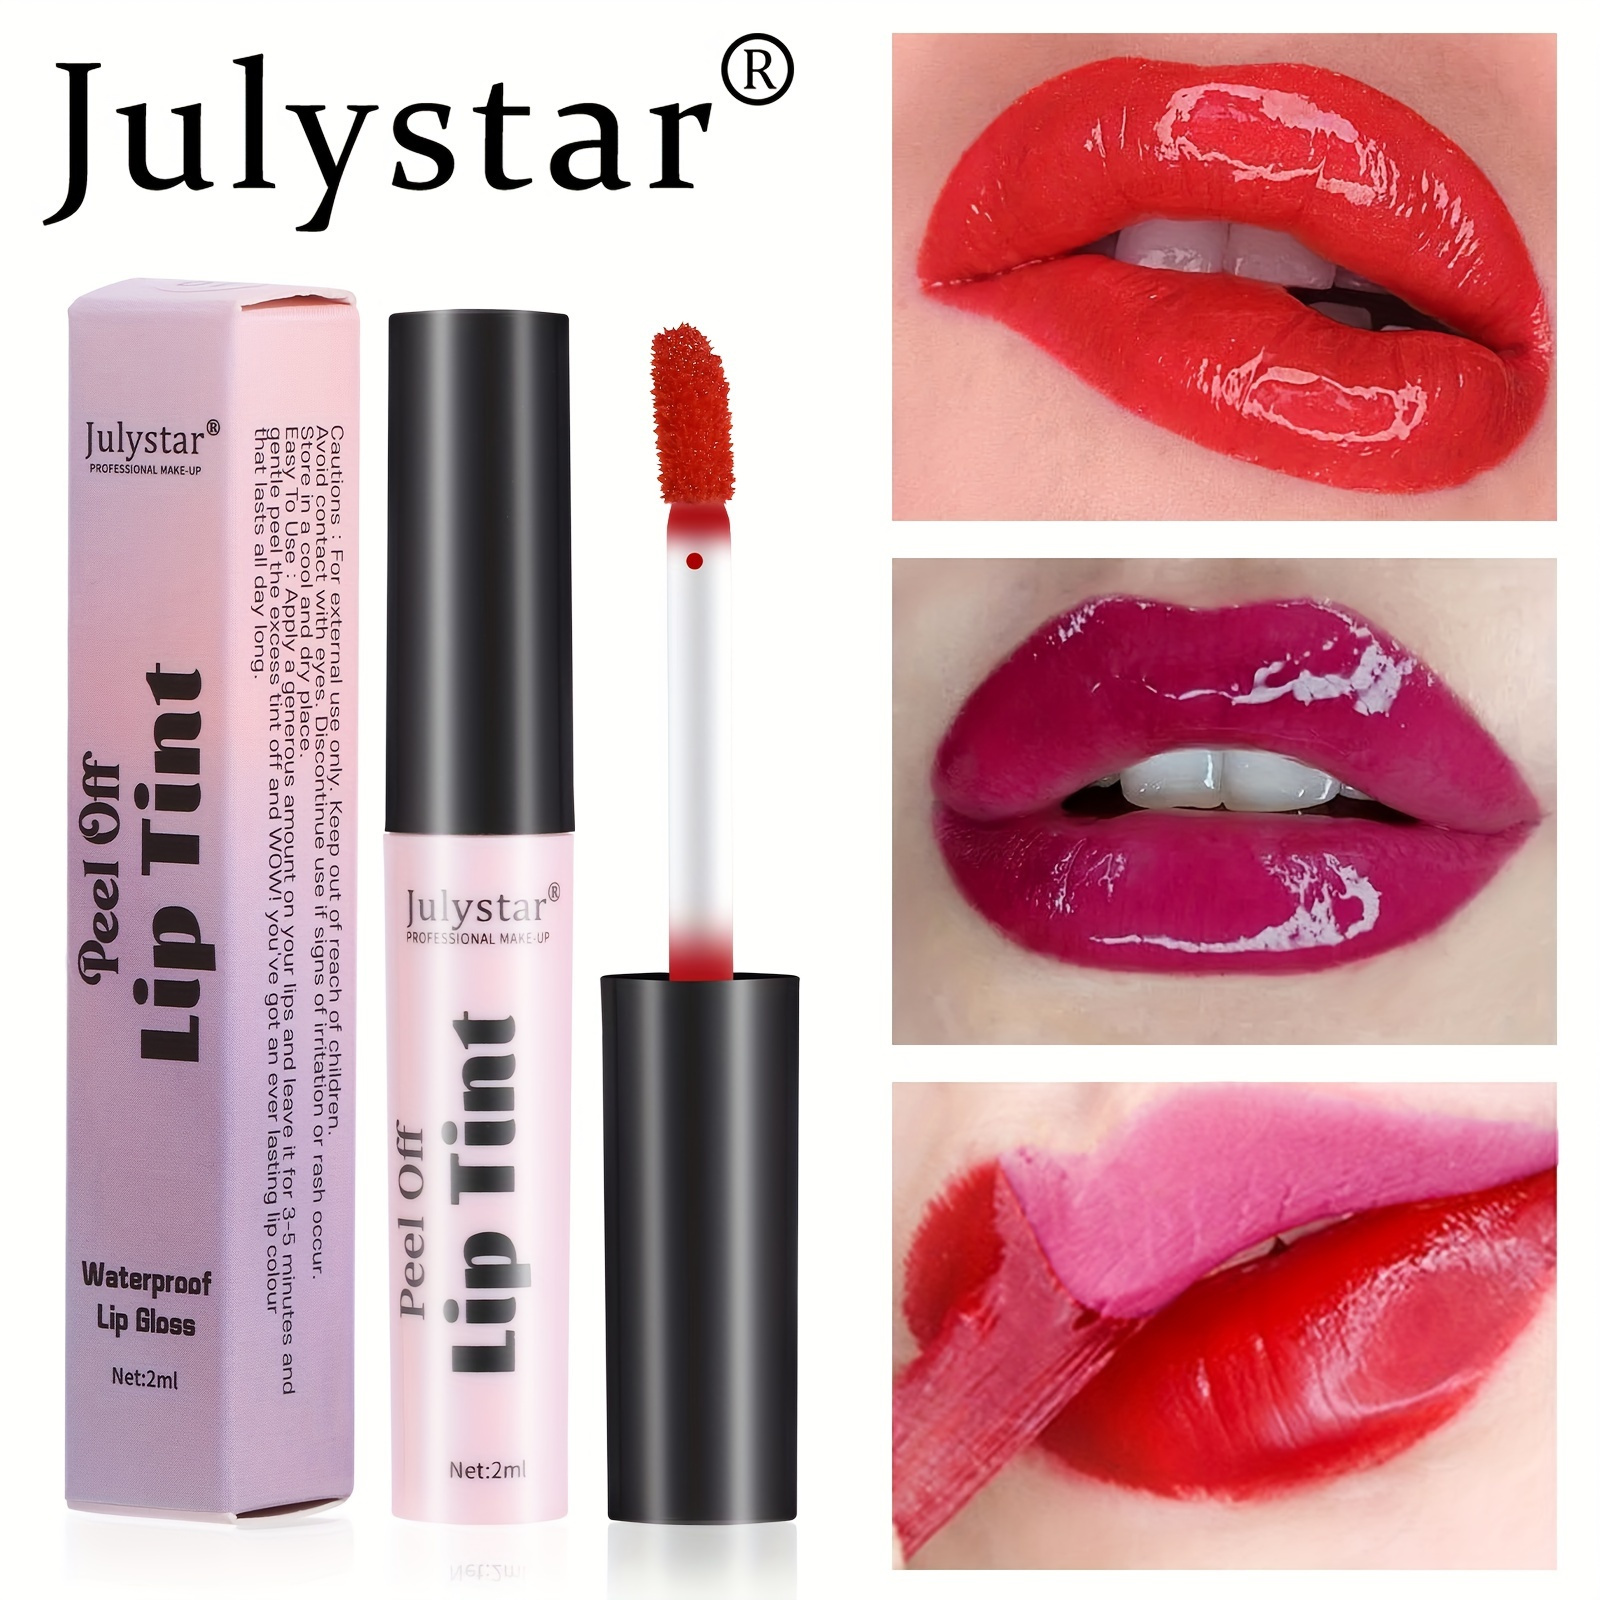 

Julystar Long-lasting Matte Lipstick - Peel Off, Moisturizing & Natural Look For All Skin Types, 6 Vibrant Colors